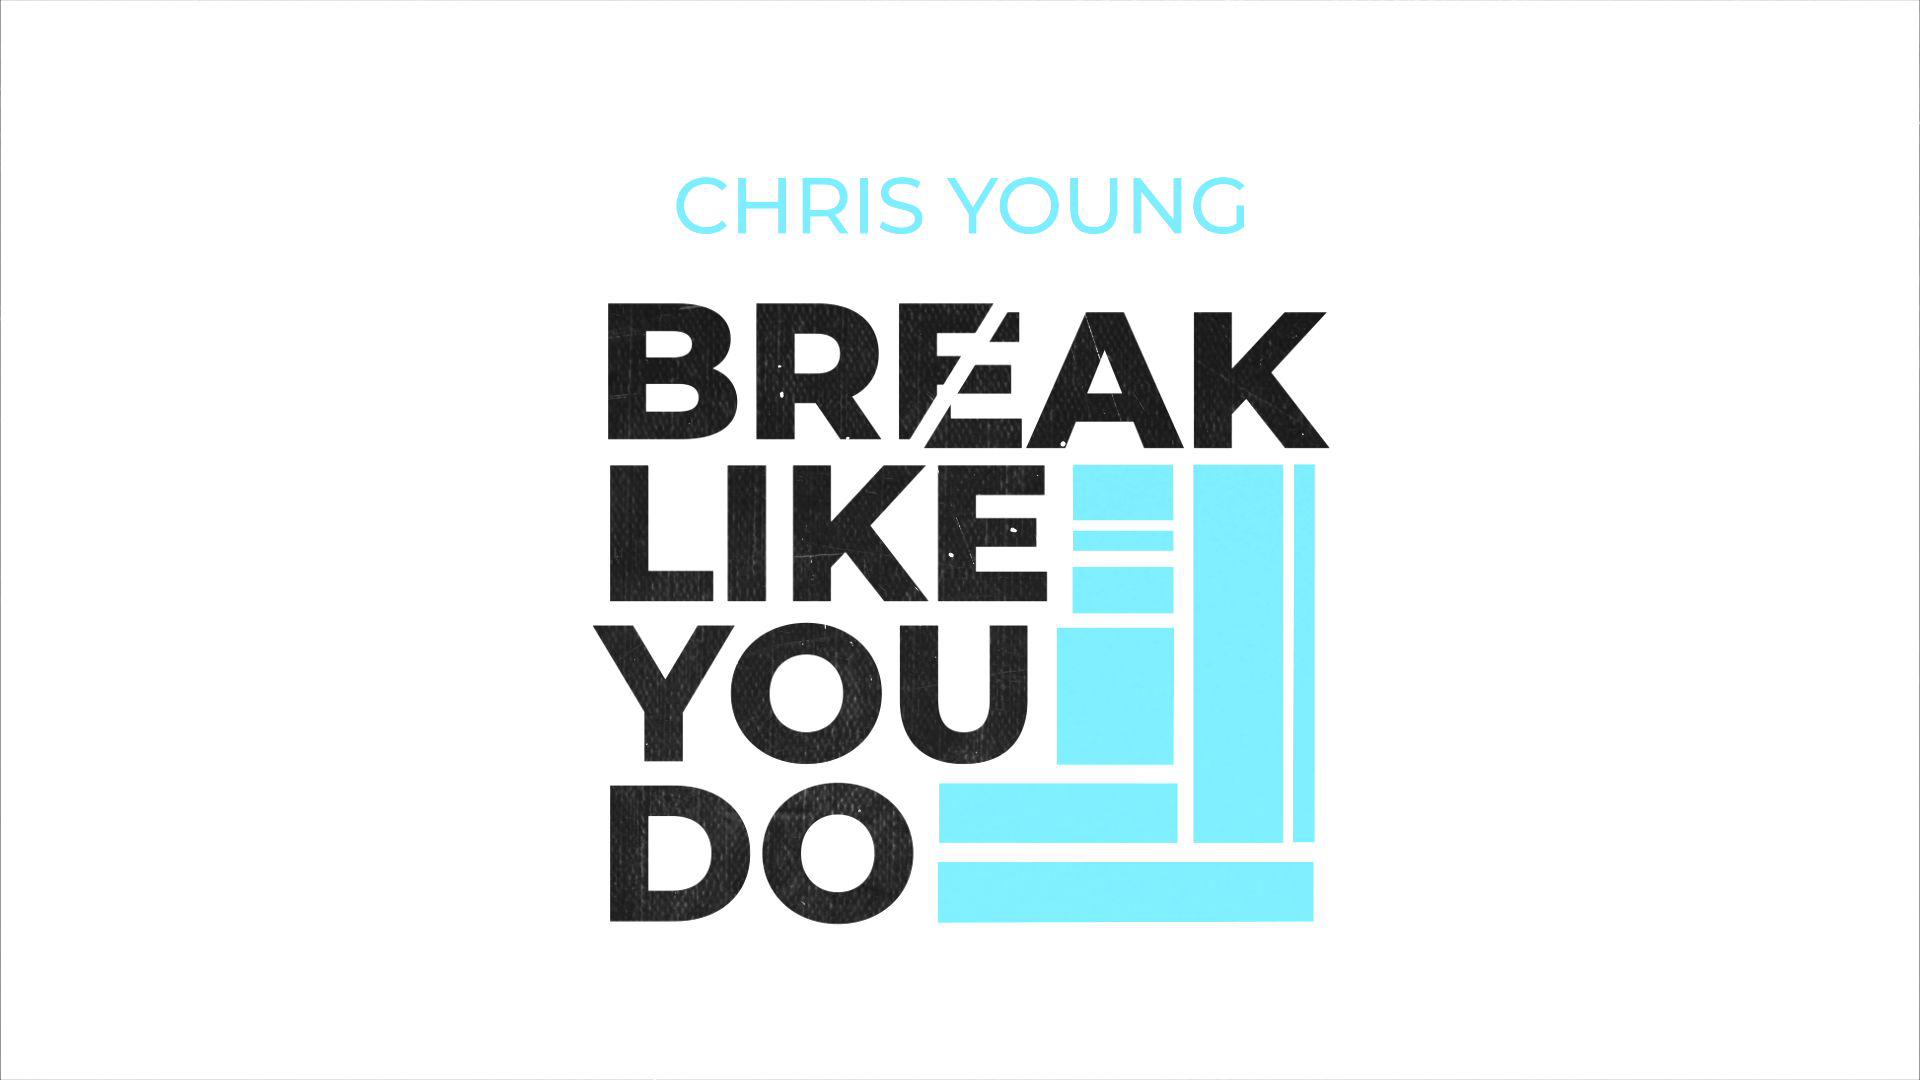 Chris Young - Break Like You Do (Lyric Video)